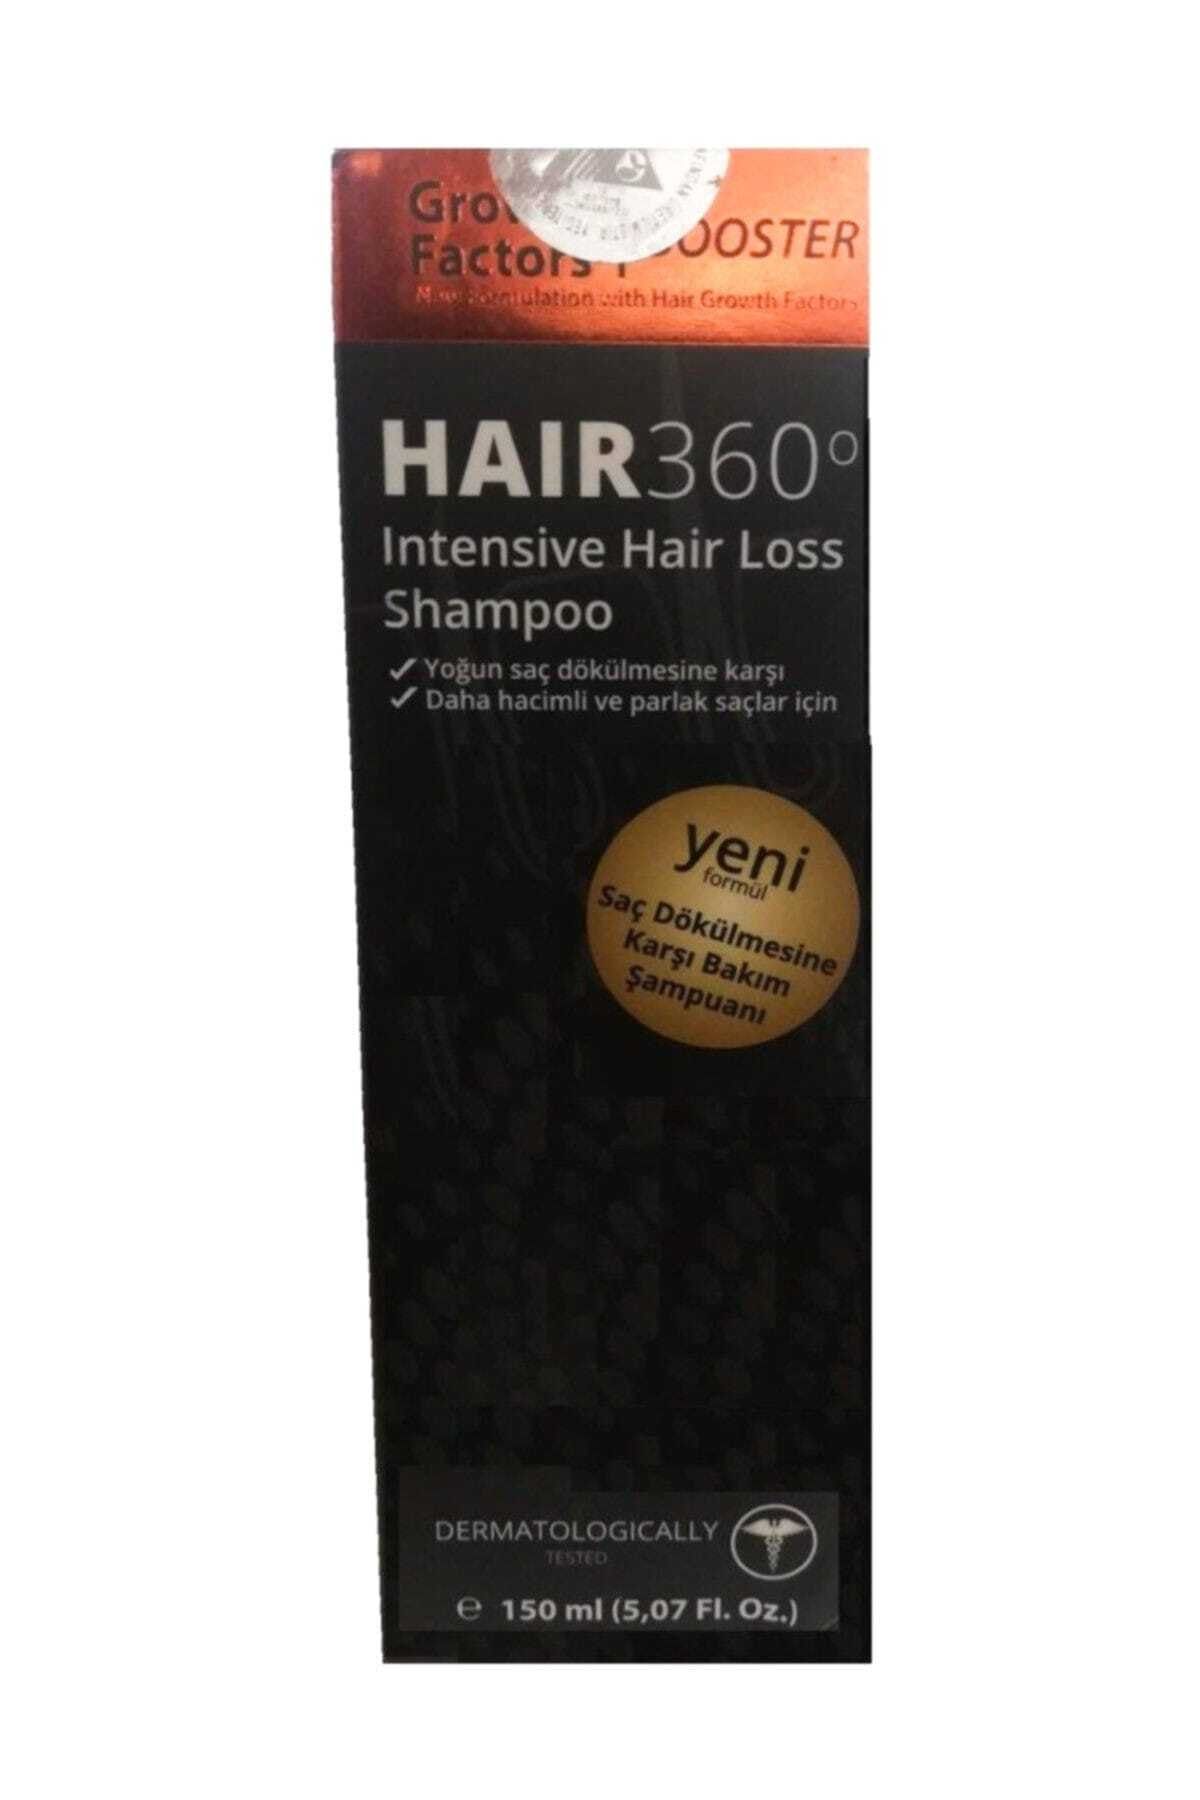 KRCDerma Hair 360 Intensıve Haır Loss Shampoo -growth Factors Booster 150 Ml